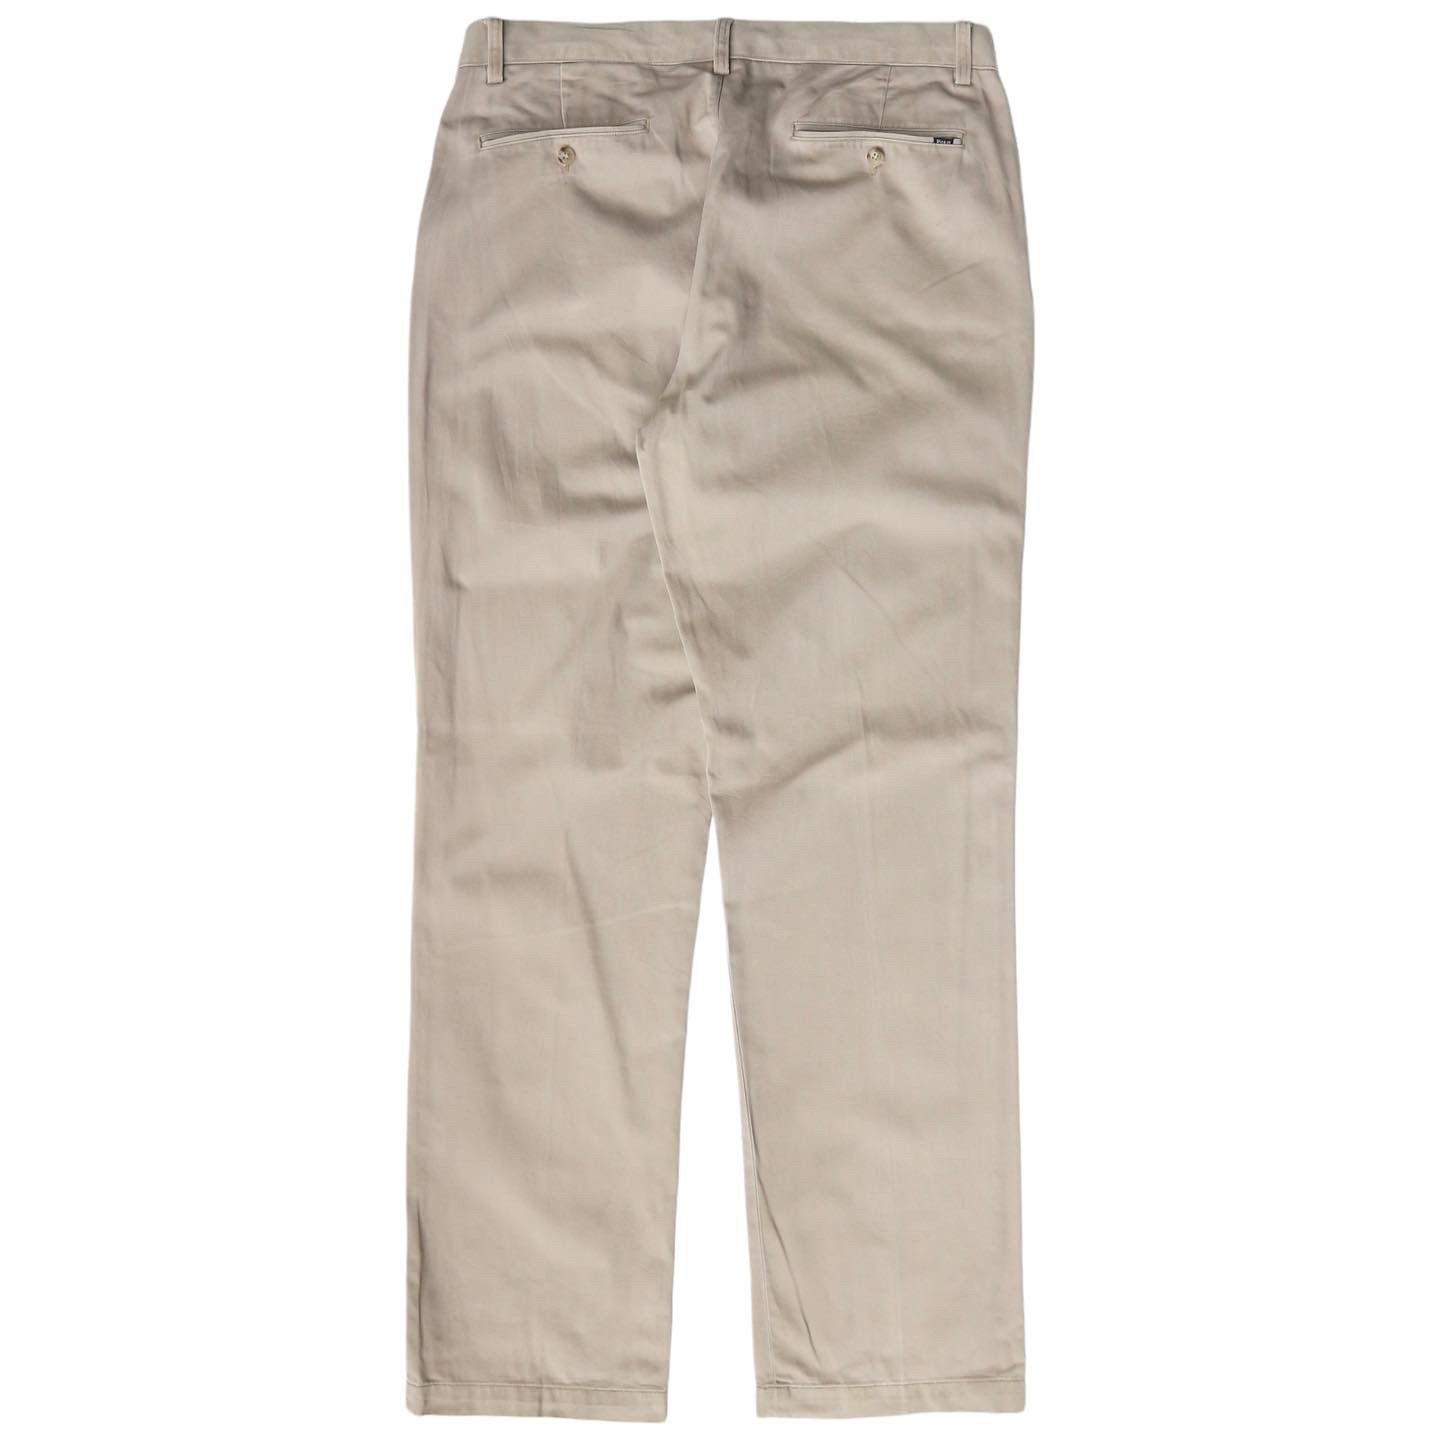 Polo by Ralph Lauren Khaki Pants Size 34 denimister